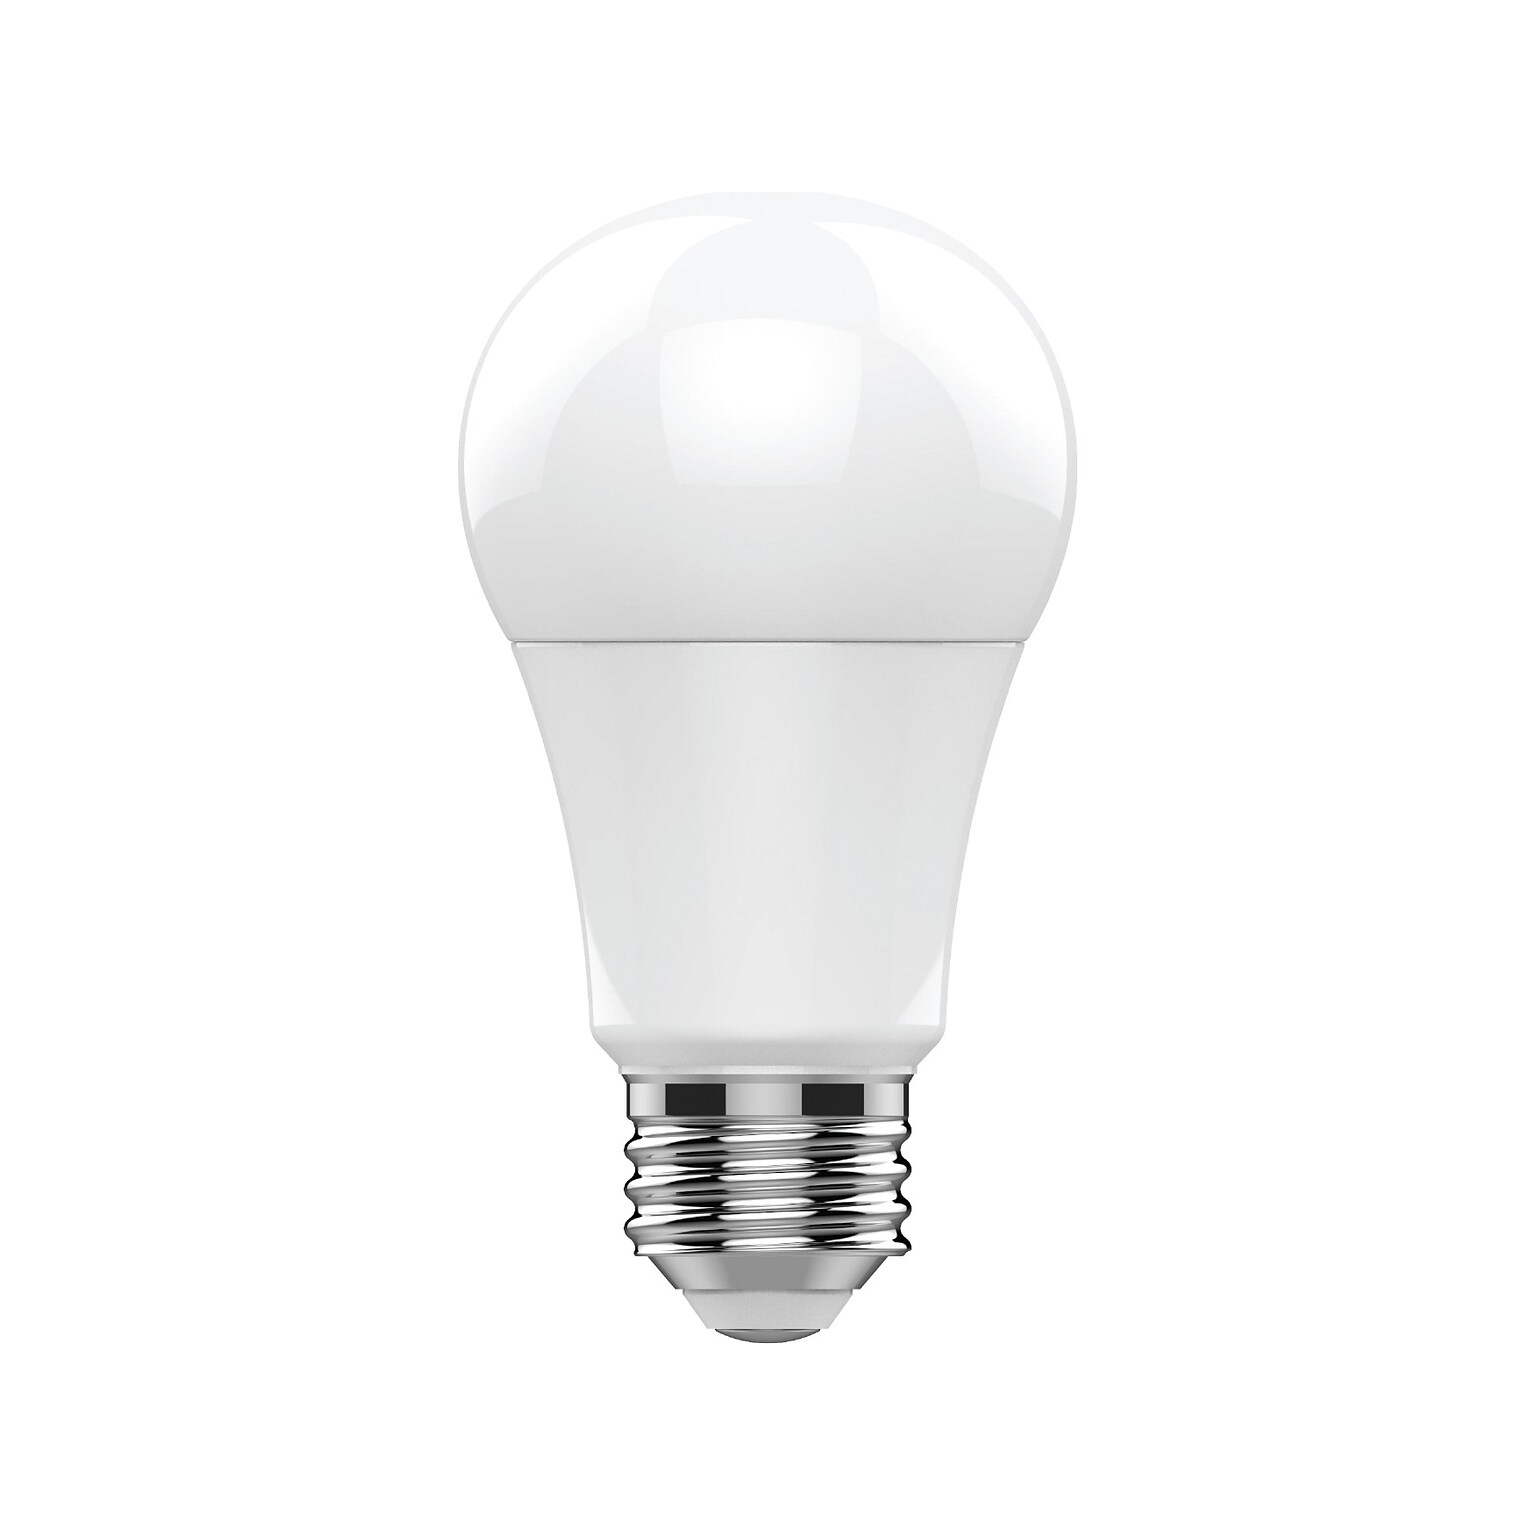 GE 10.5-Watt Soft White LED General-Purpose Bulb, 4/Pack (93131064)